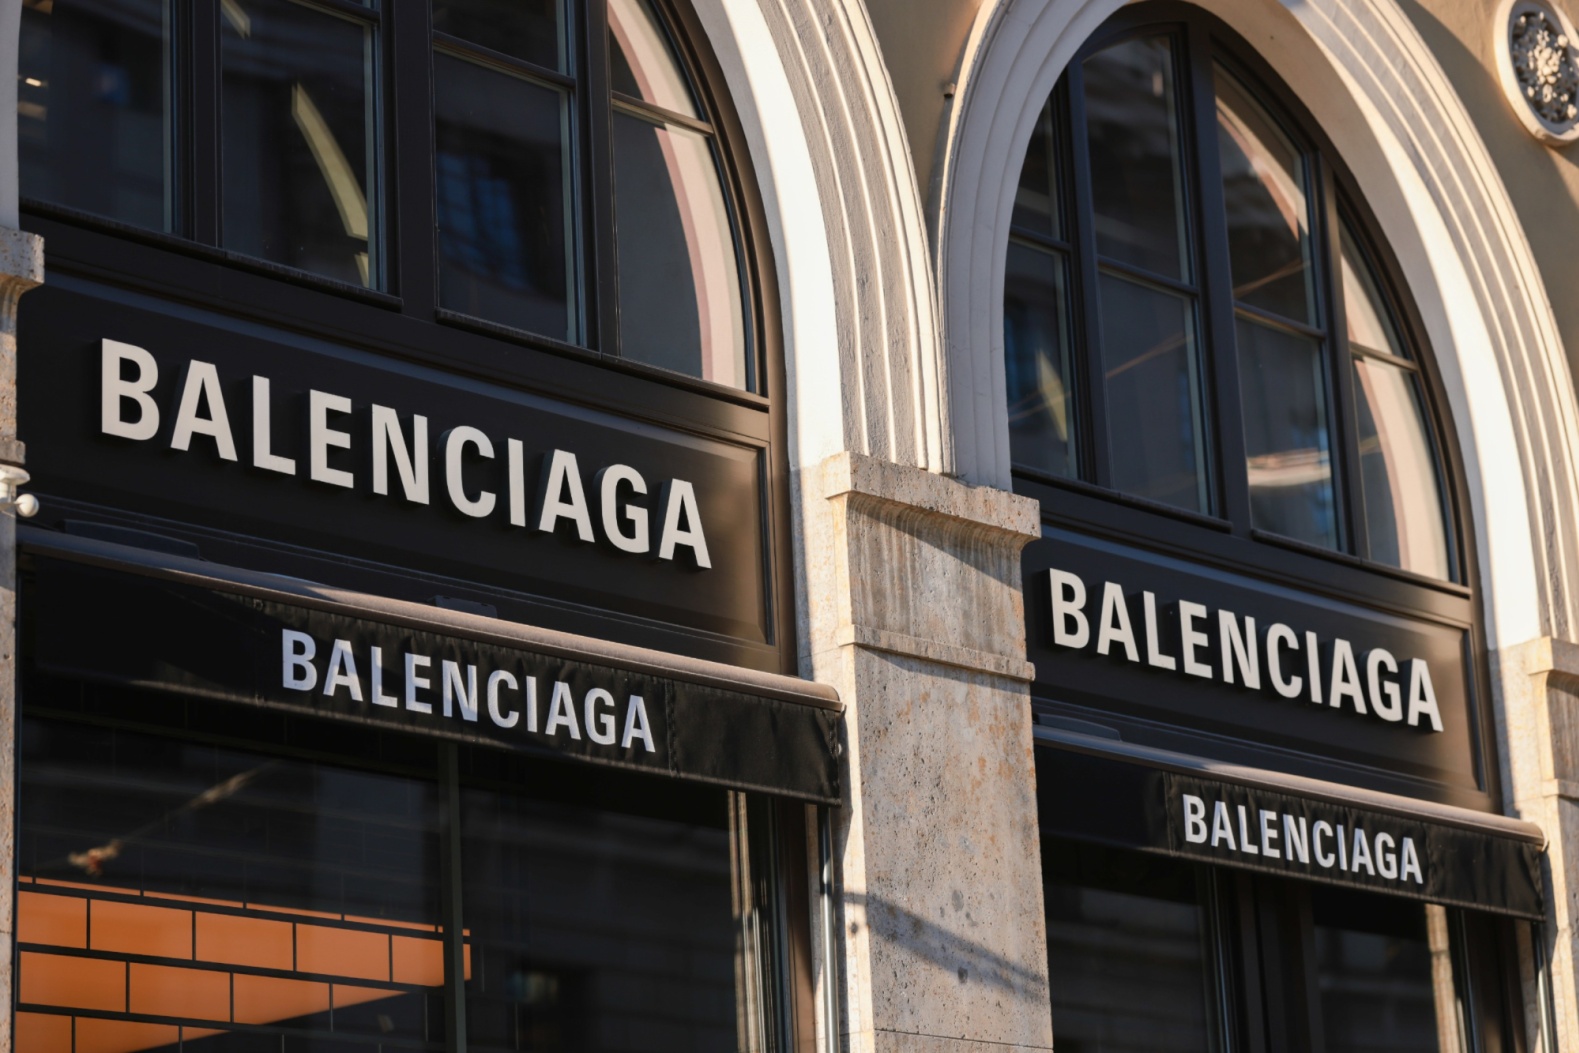 Kering and Balenciaga Partner Together – OptikNow